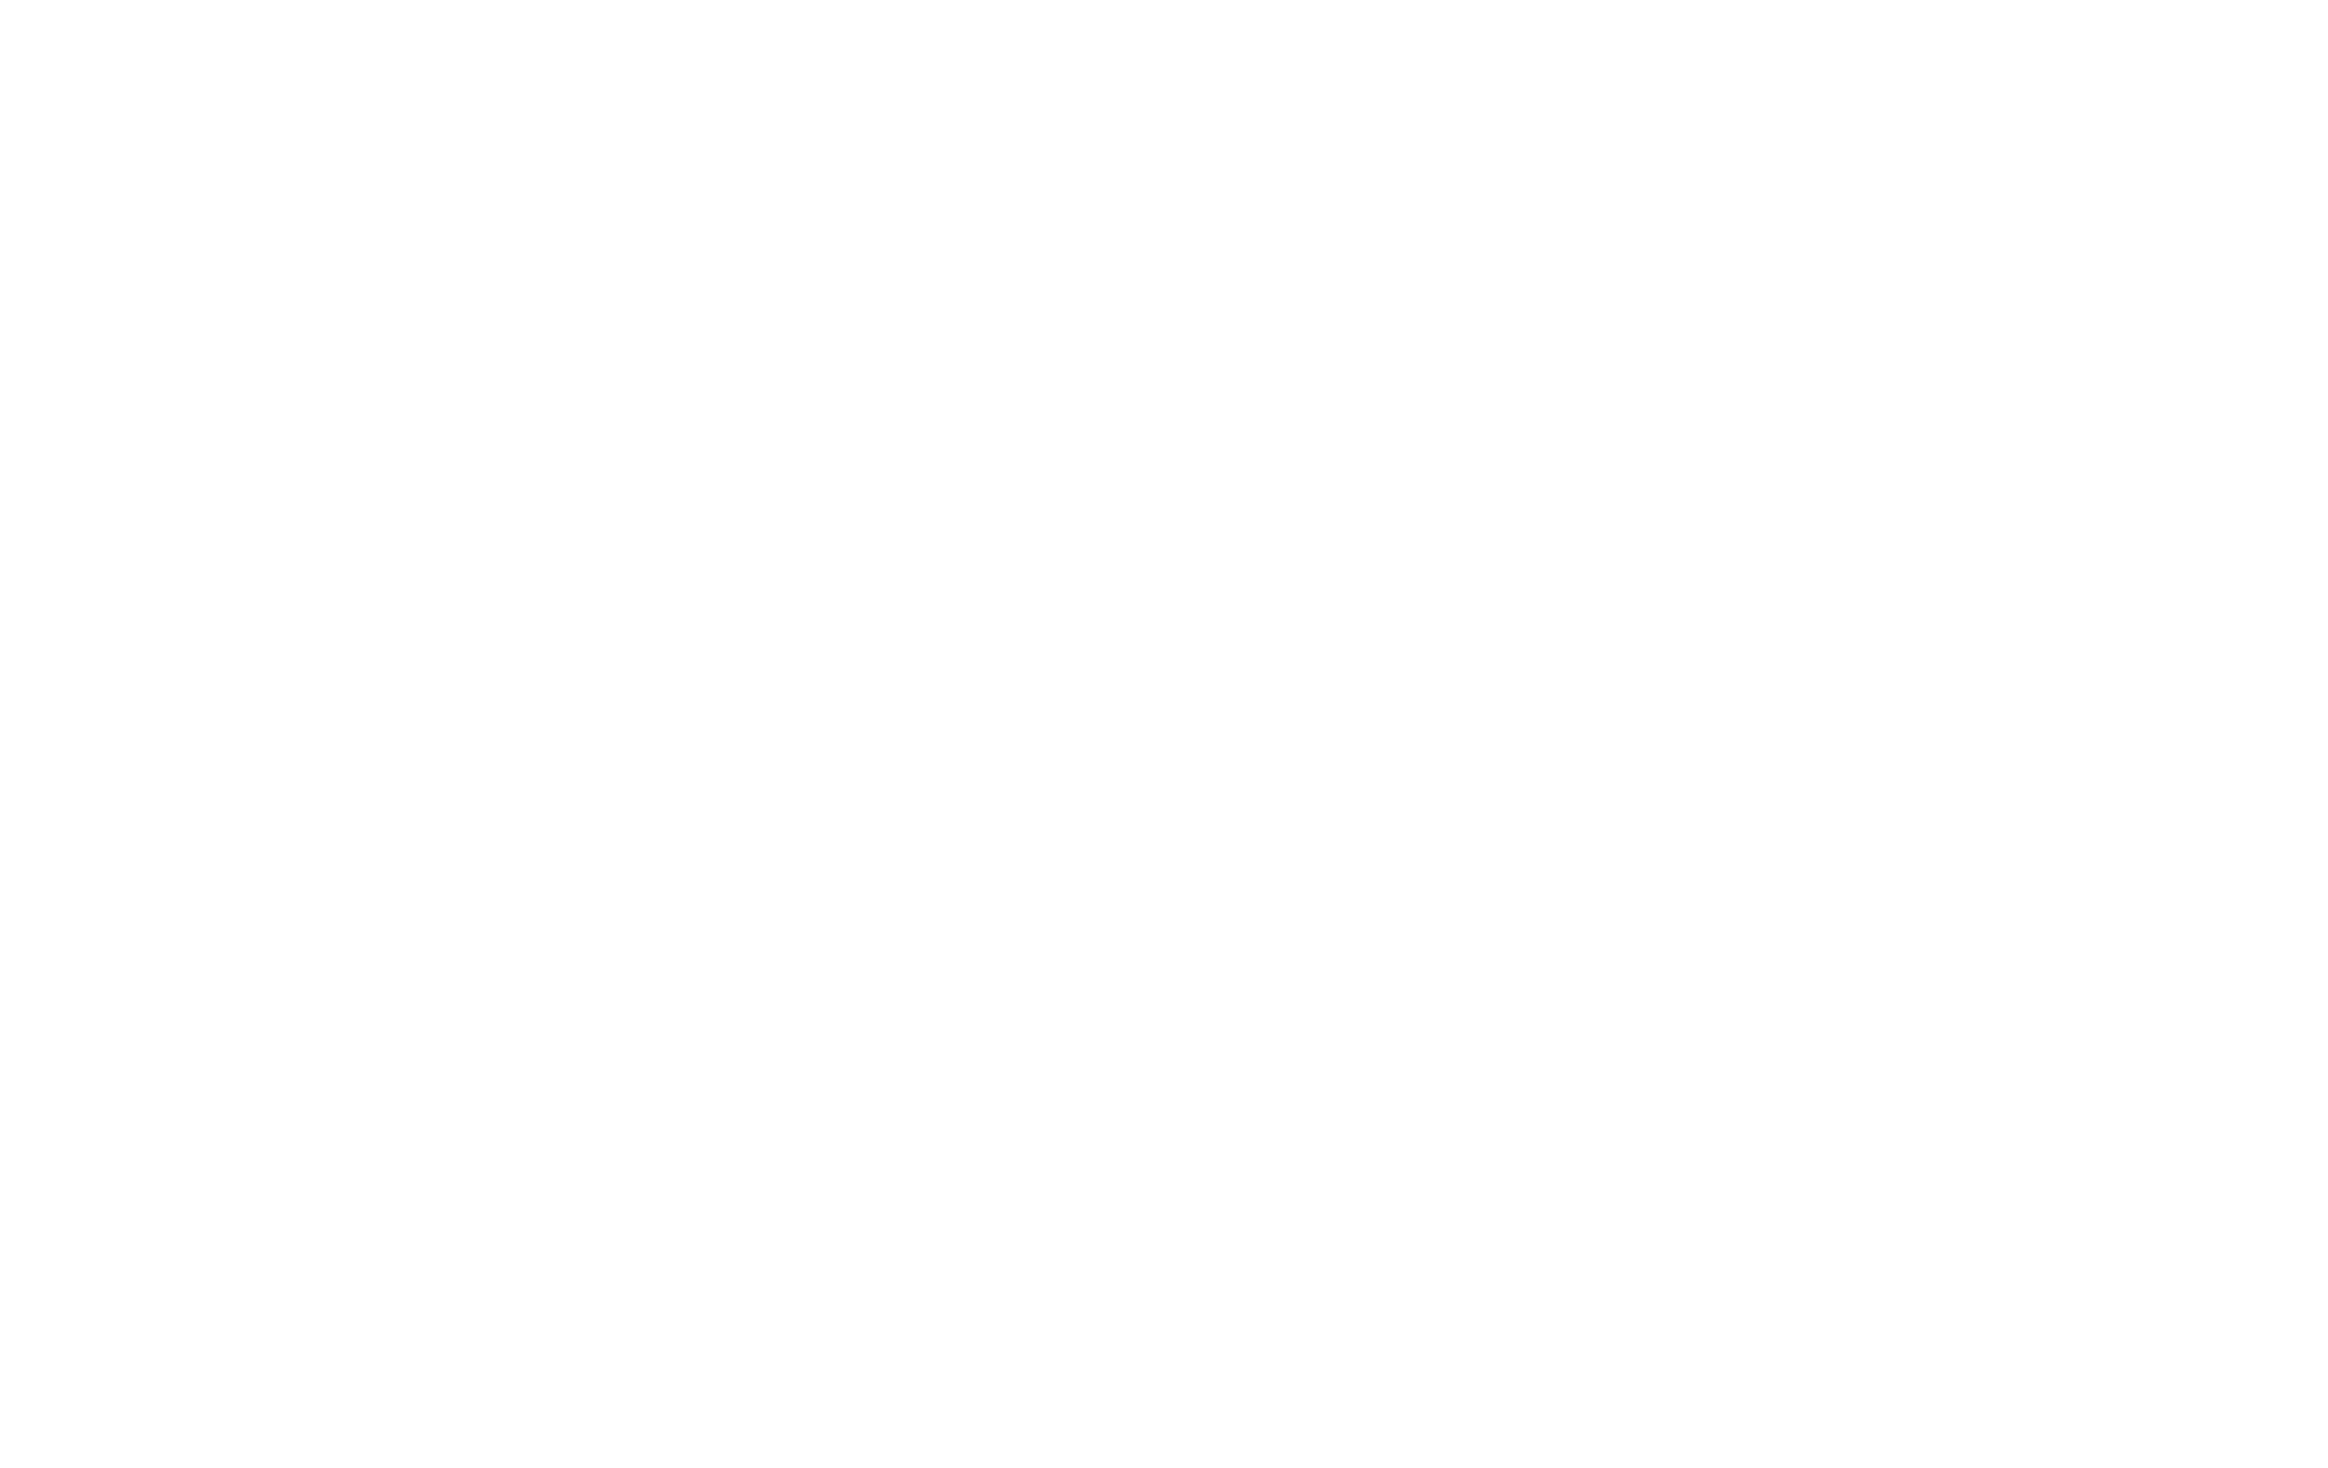 logo_principal